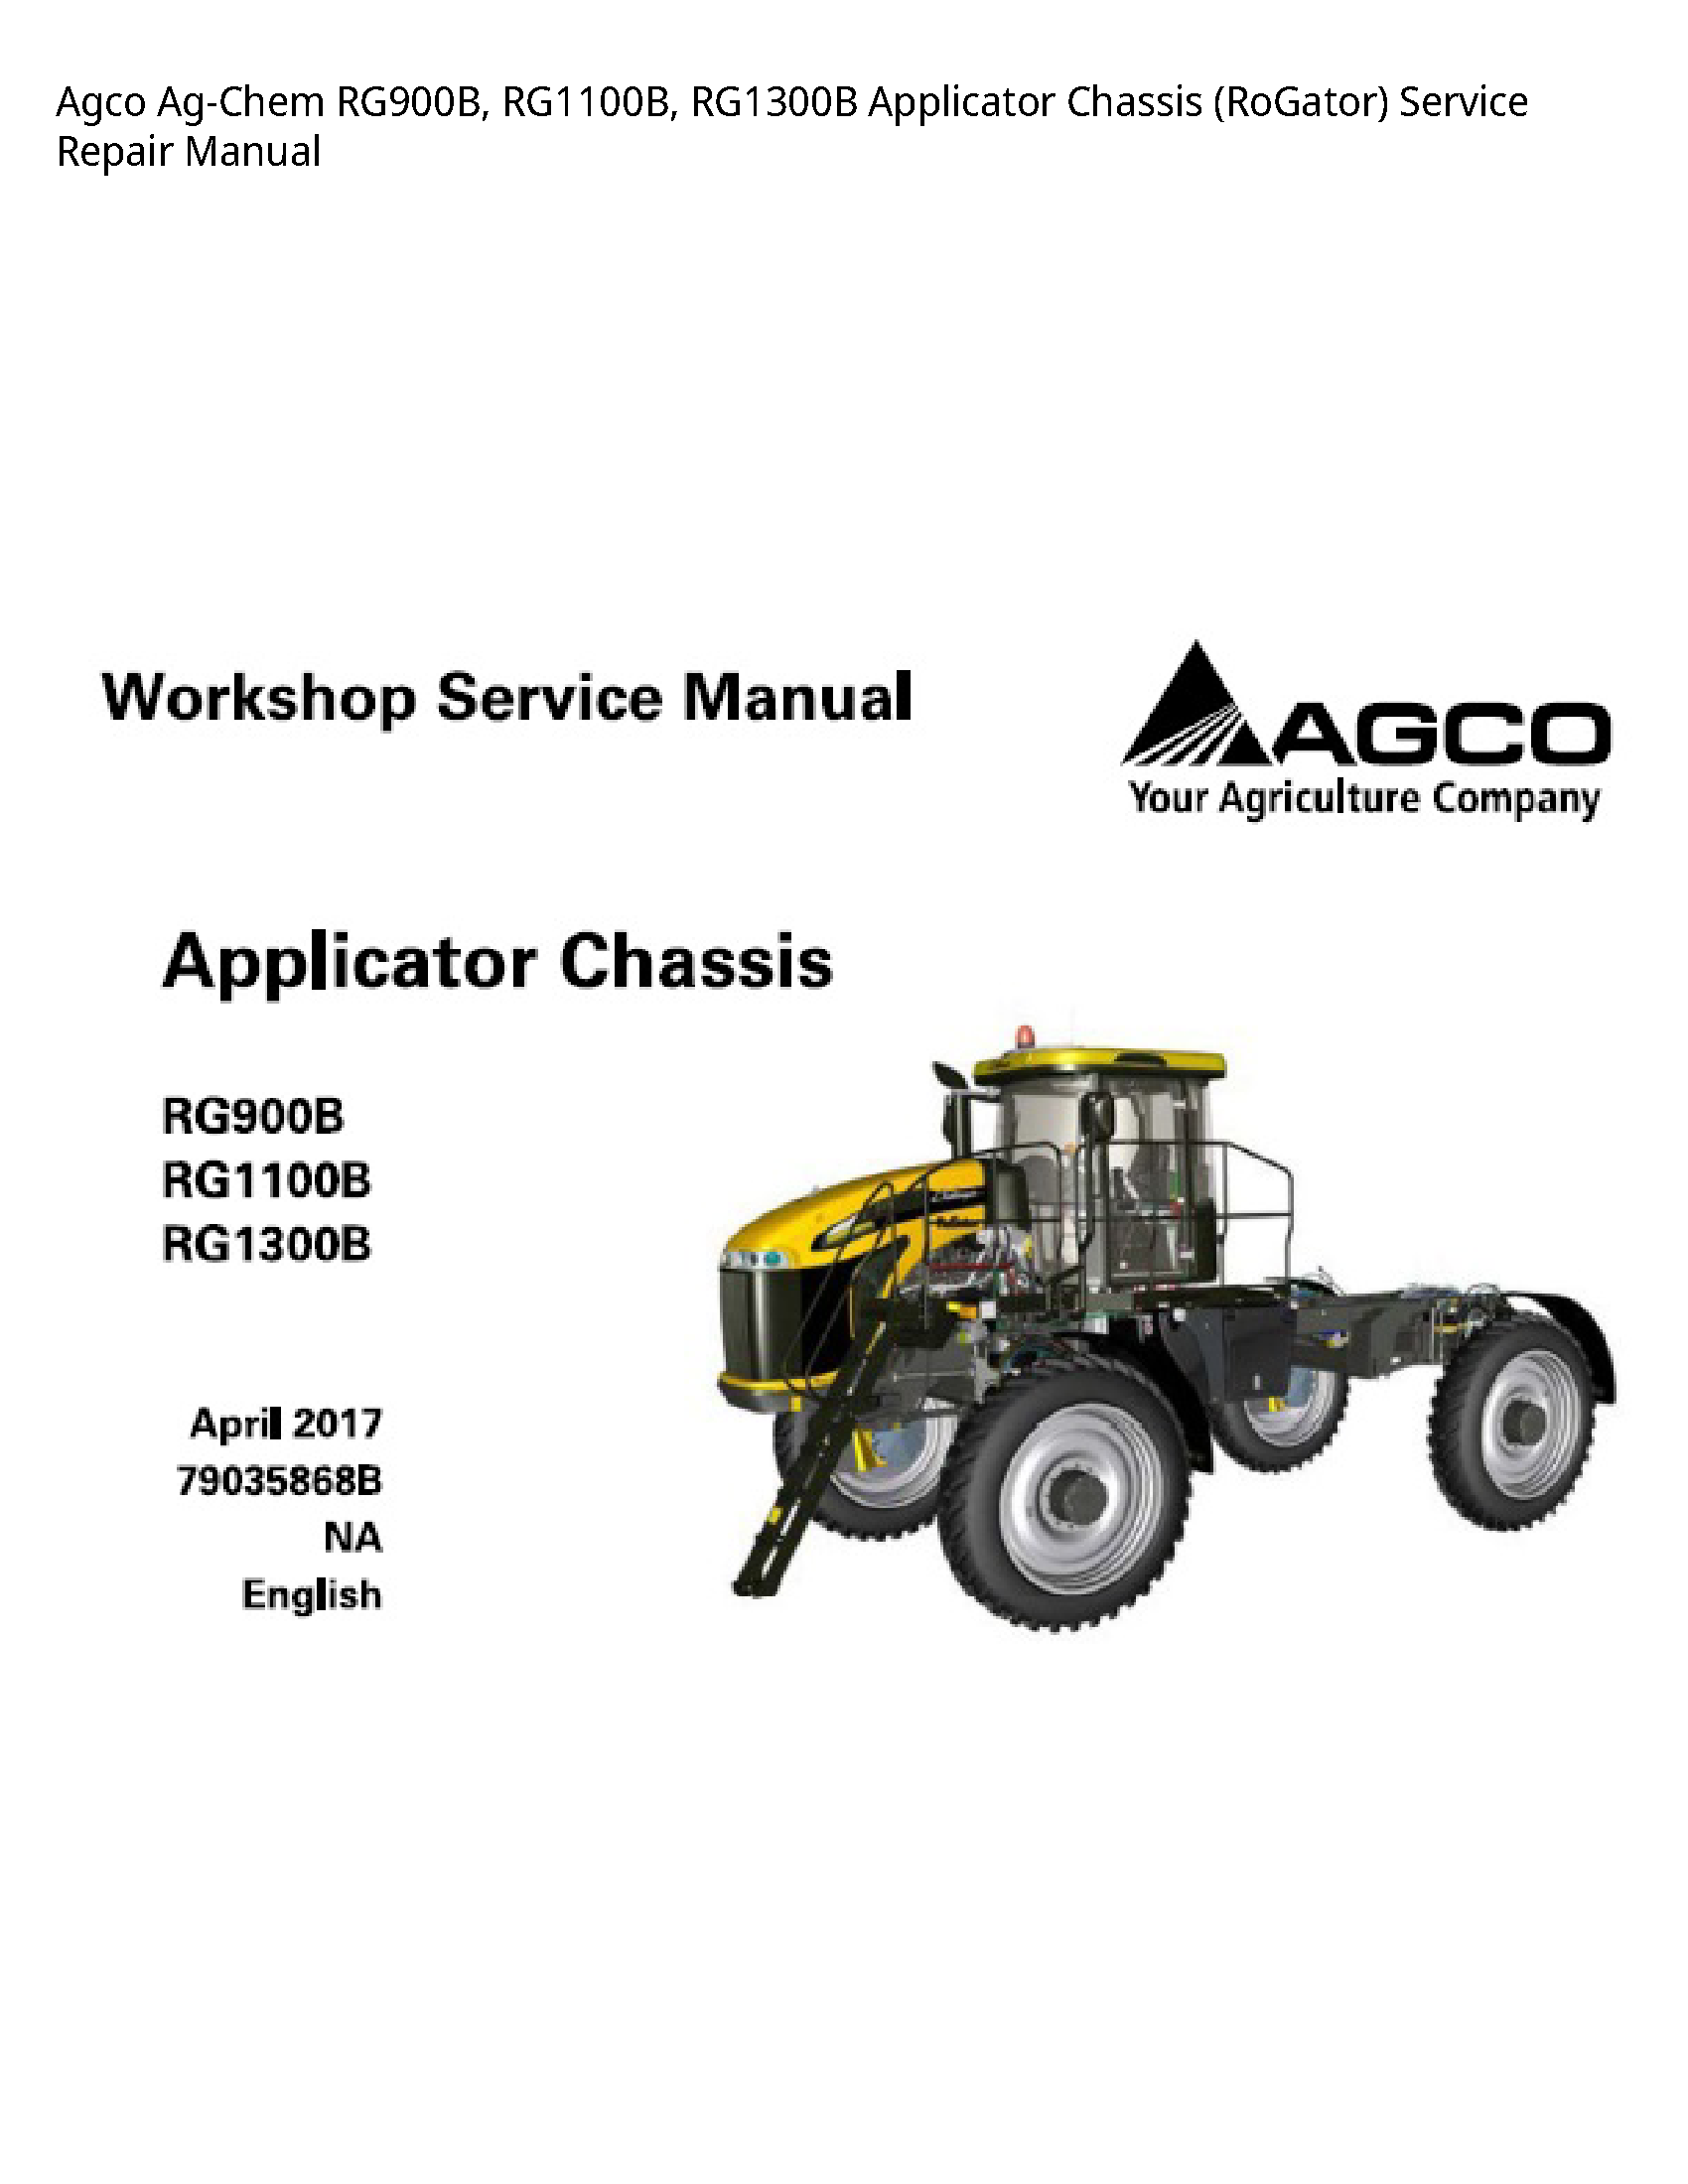 AGCO RG900B Ag-Chem Applicator Chassis (RoGator) manual